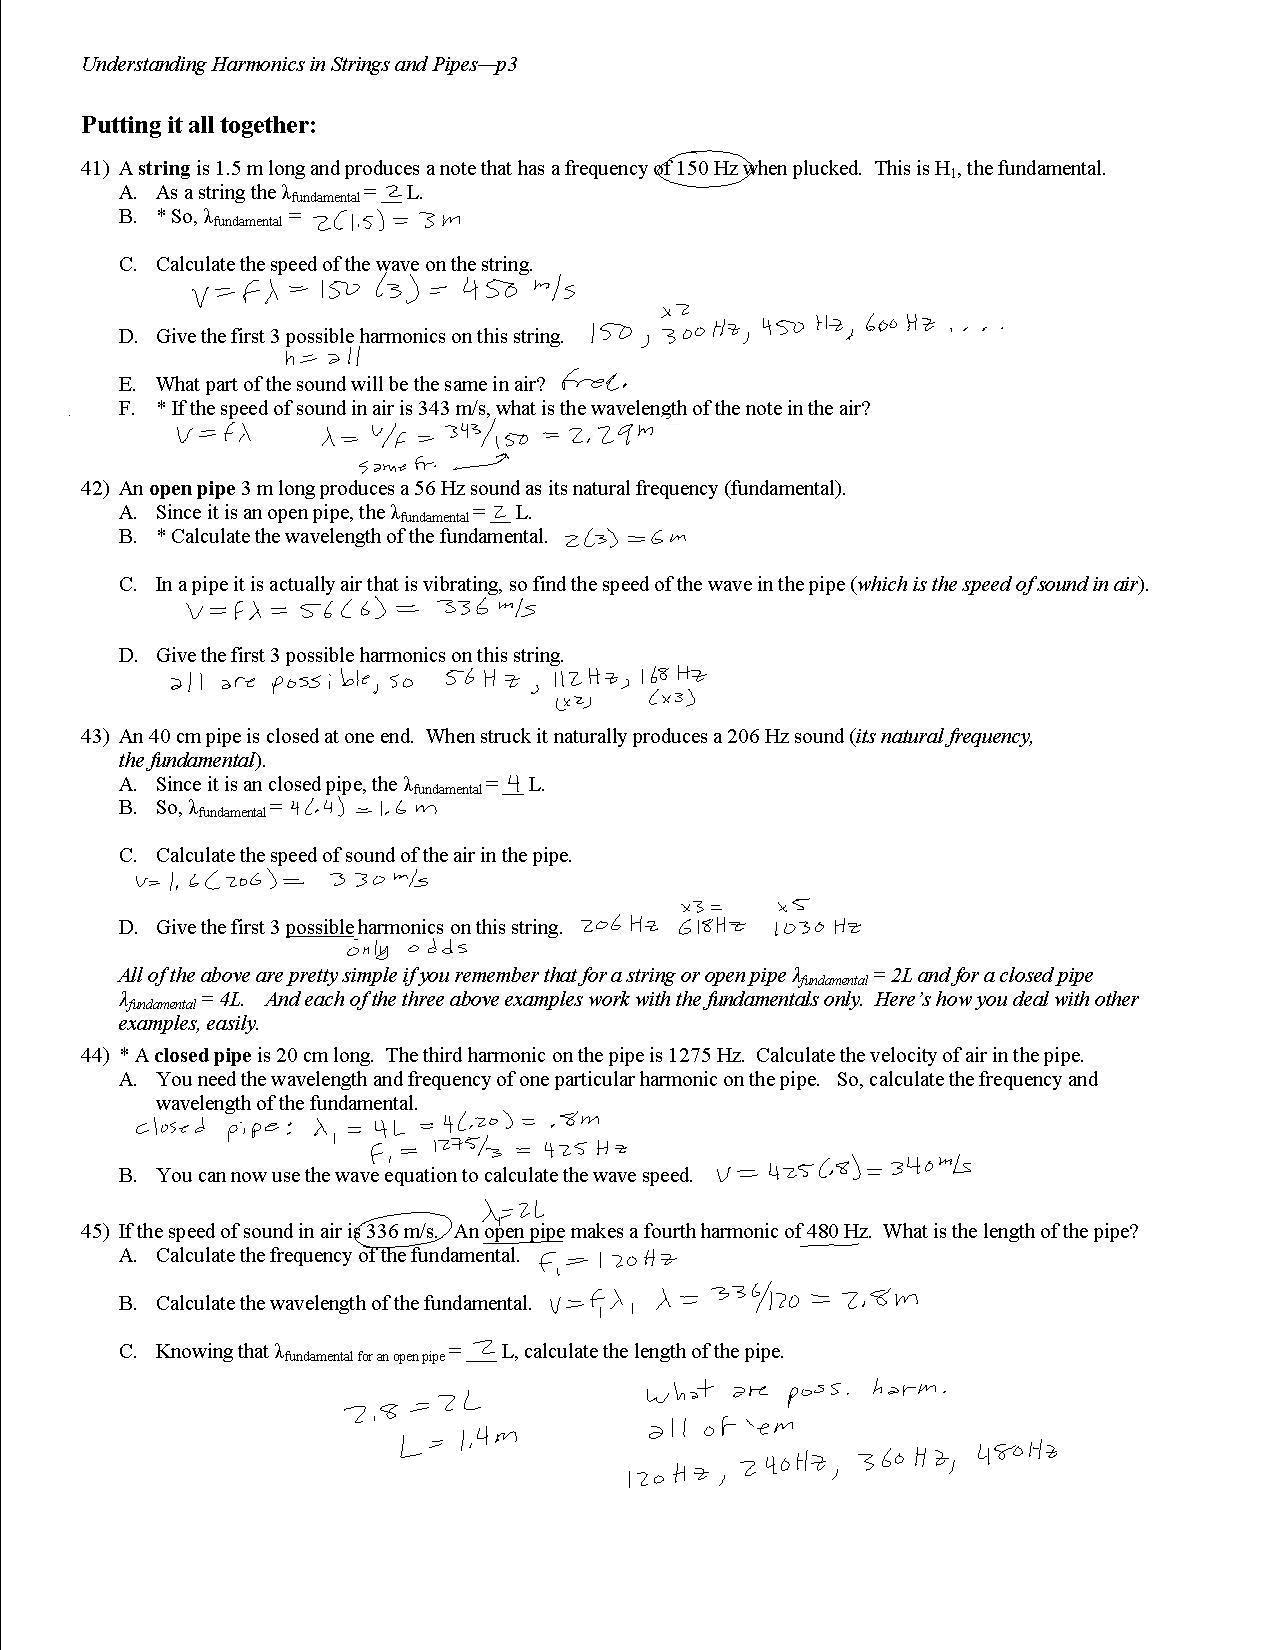 kinematic-worksheet-1-answers